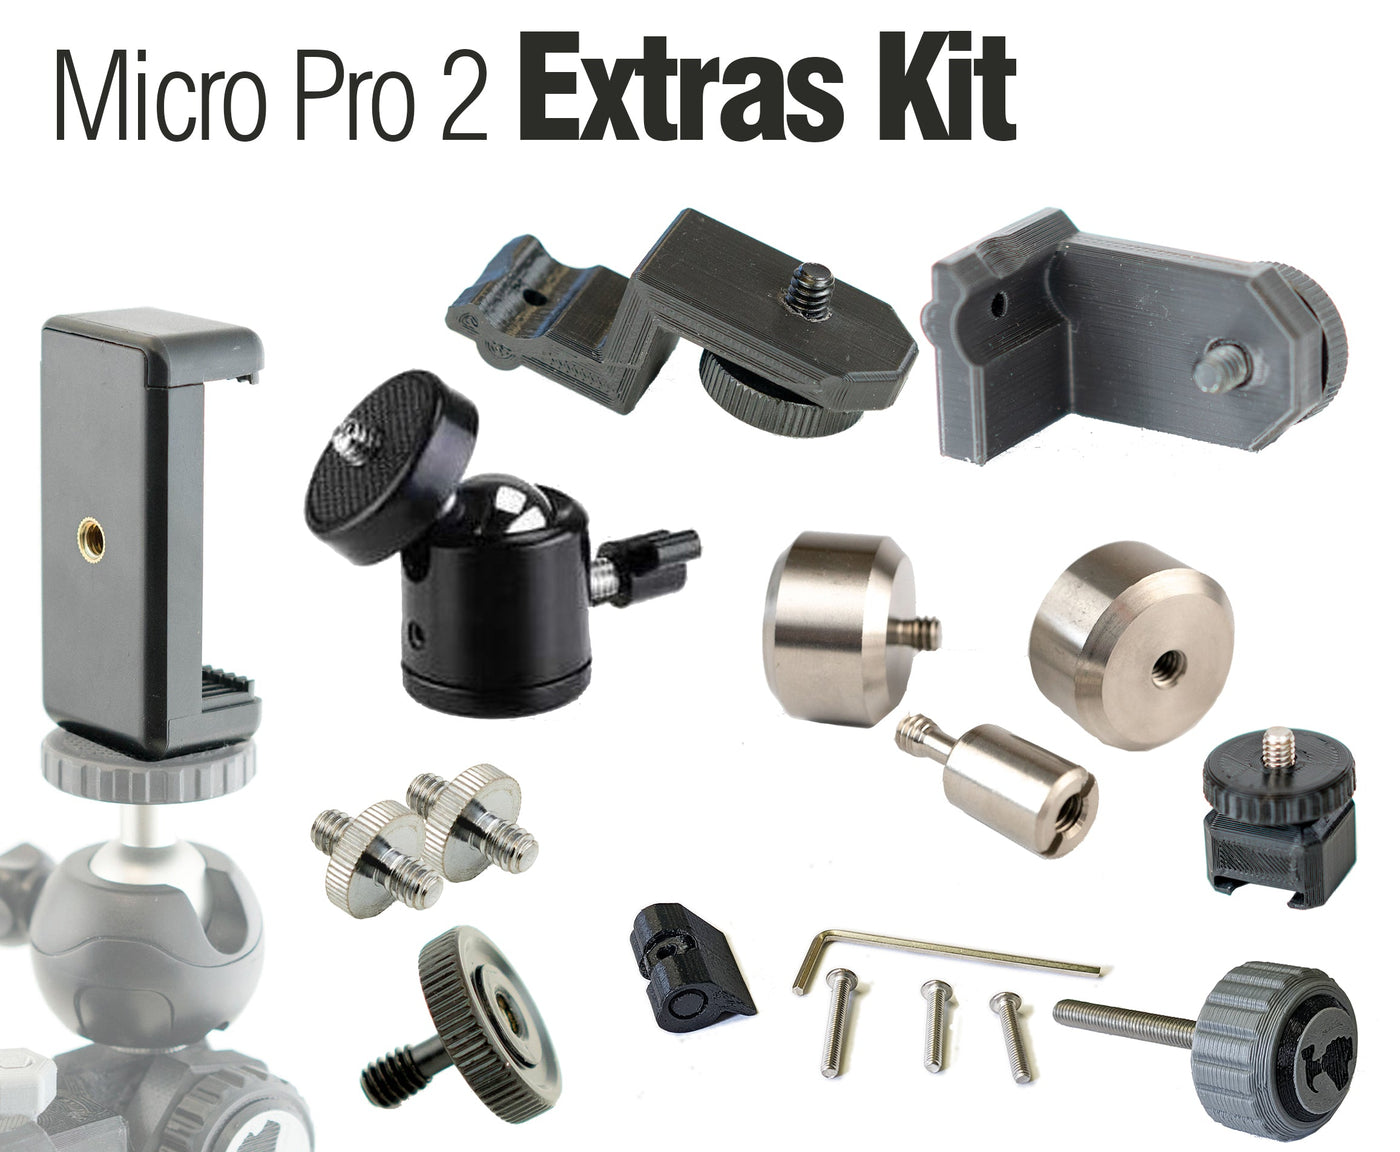 Extras Kit for Micro Pro 2 - UK - ScottyMakesStuff